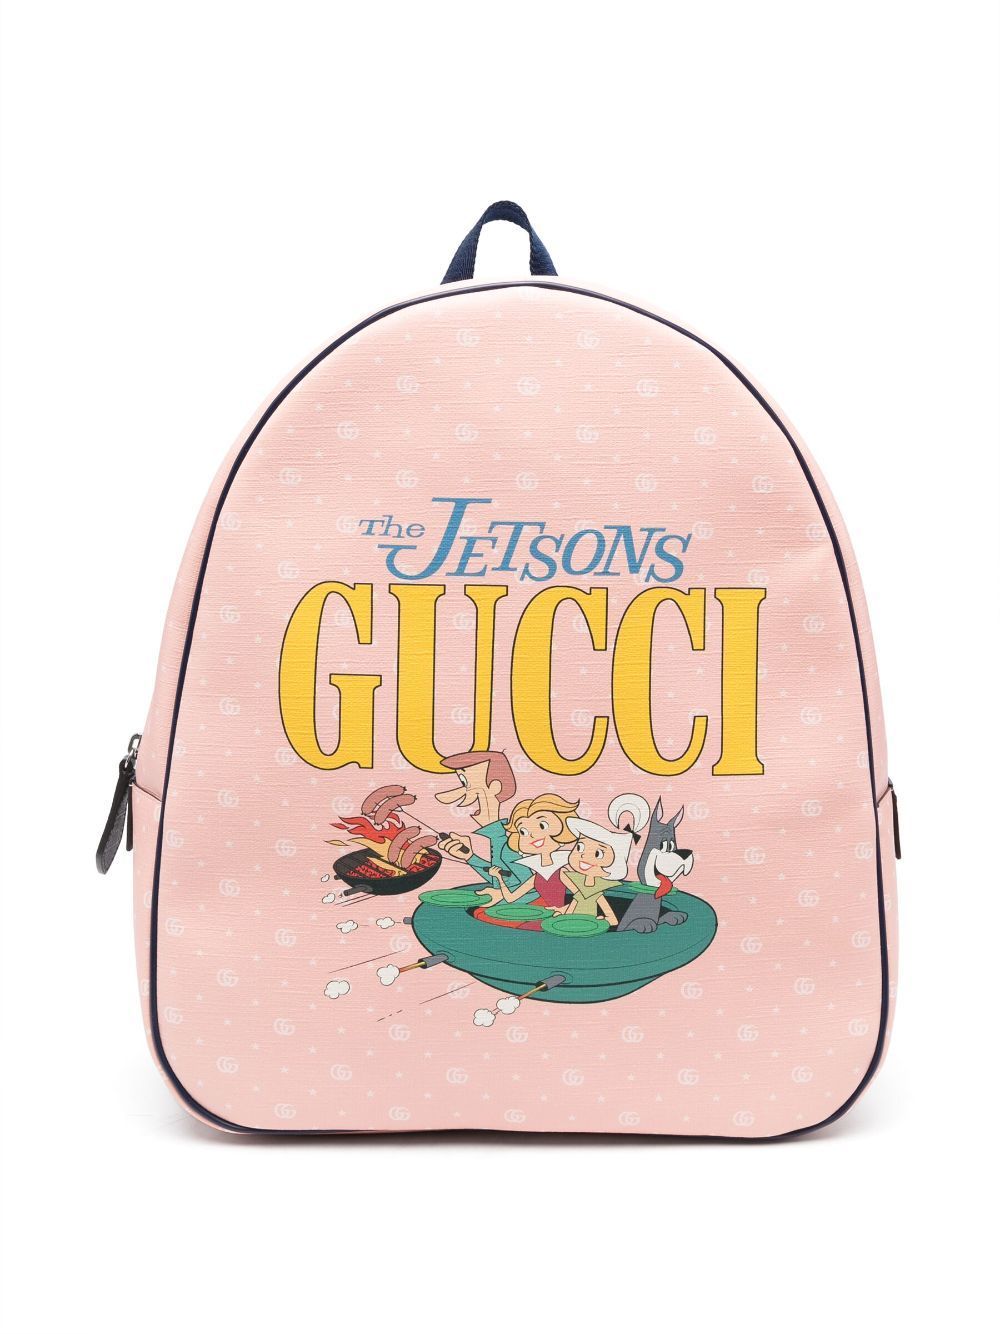 Gucci Gucci Print Leather Backpack - Farfetch